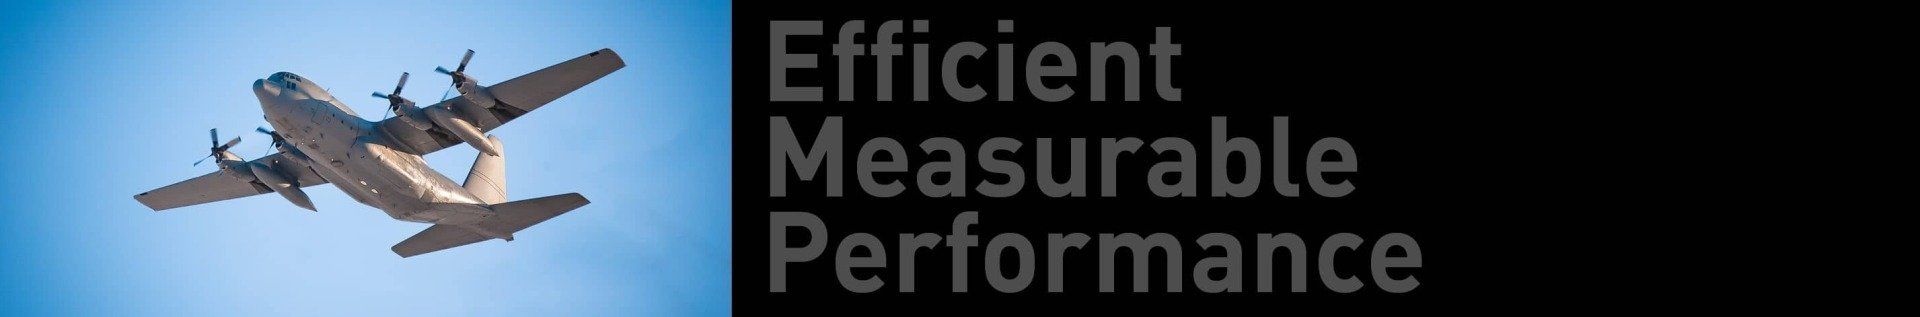 Efficient Measurable Performance banner